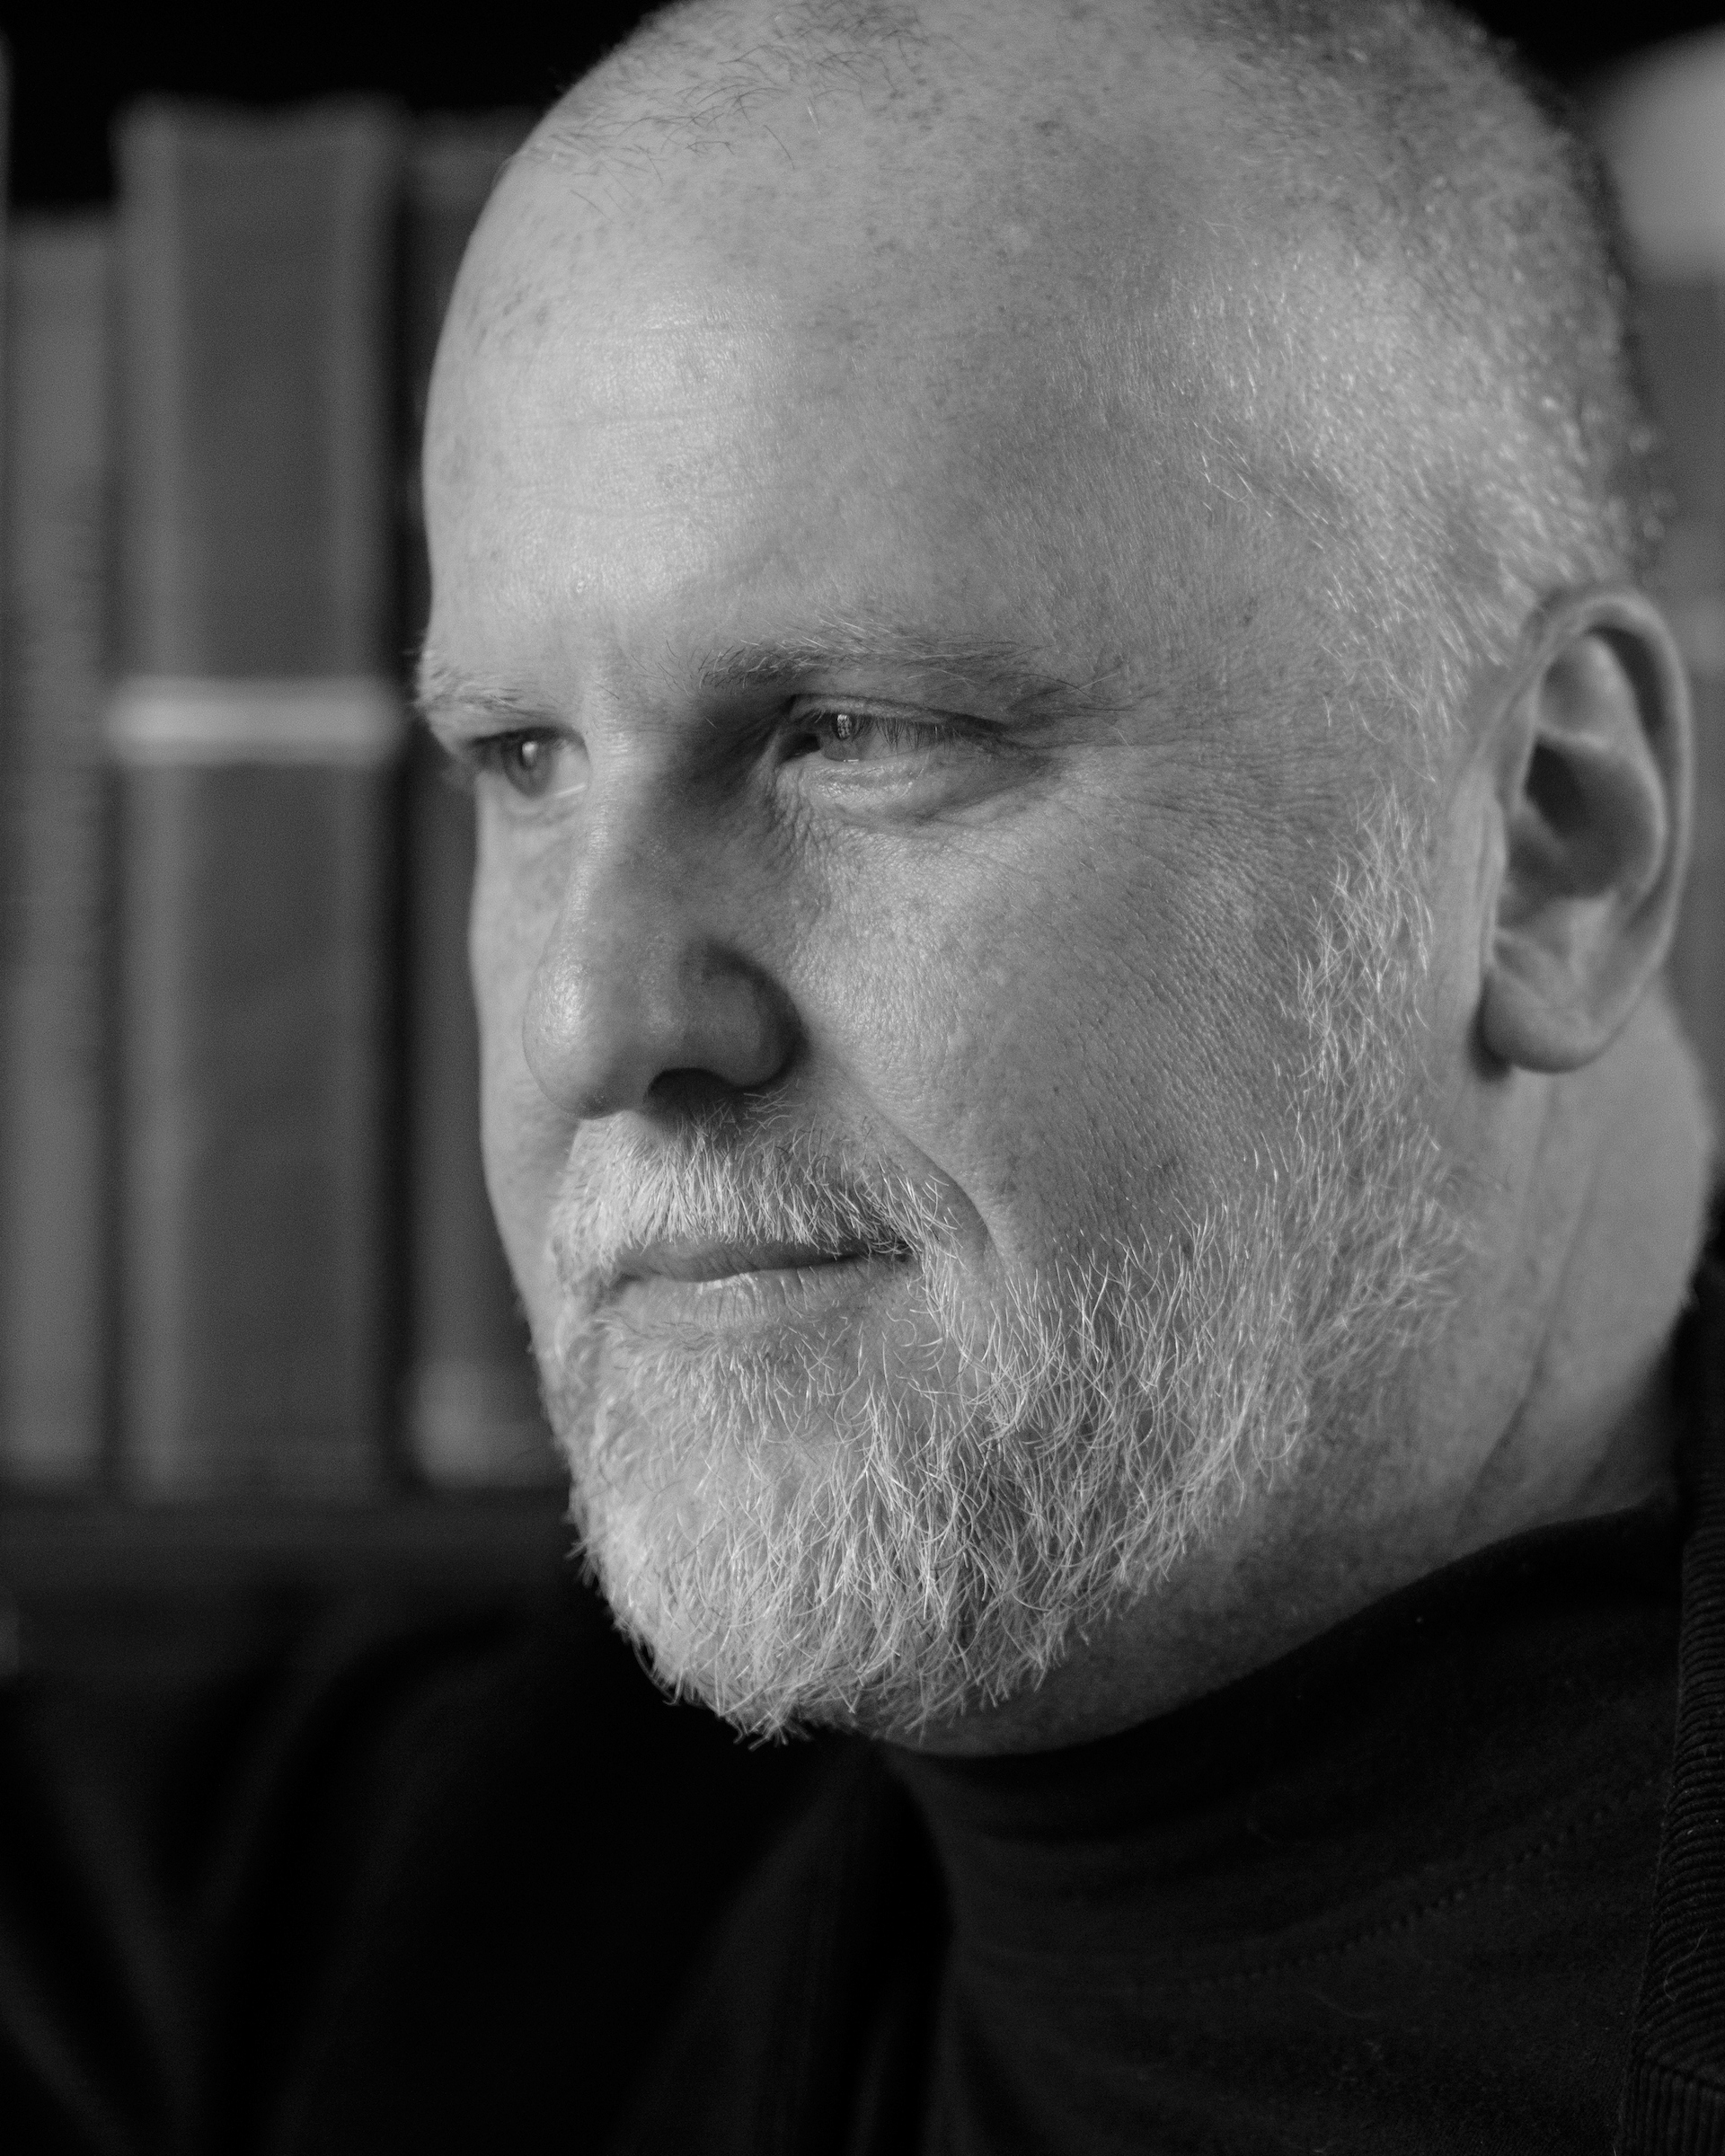 A black and white headshot of Michael Patrick Lynch.